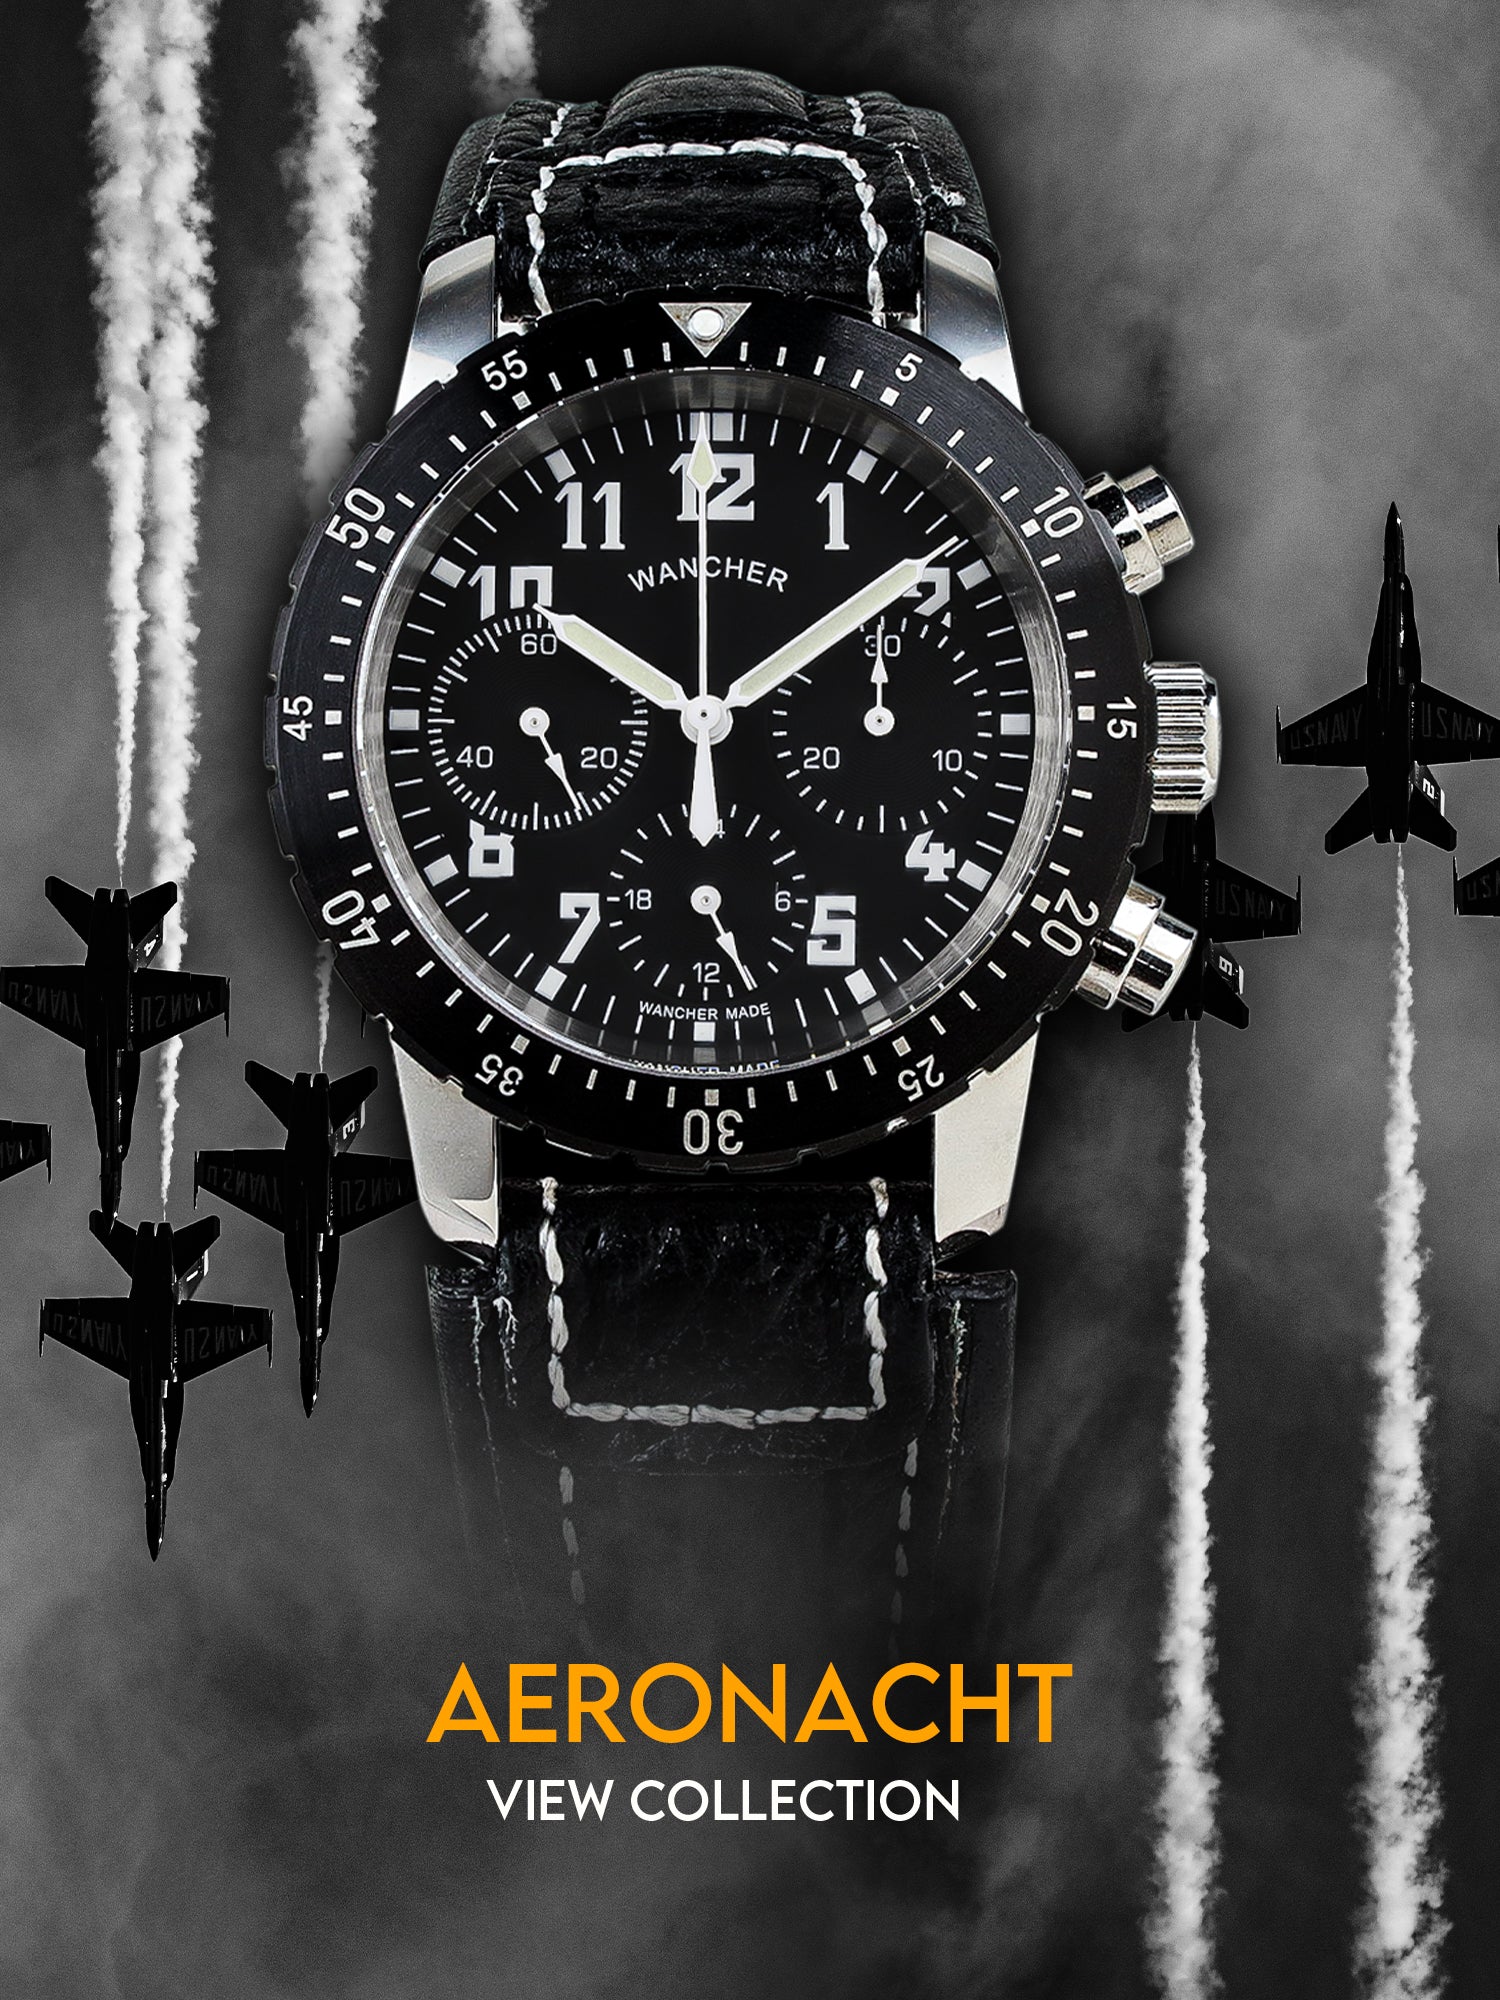 Wancher watch Aeronacht Vintage Jet Pilot Inspired Chronograph Mechanical Watch Collection powered by Seagul ST19 Chronograph Movement Mechanical 